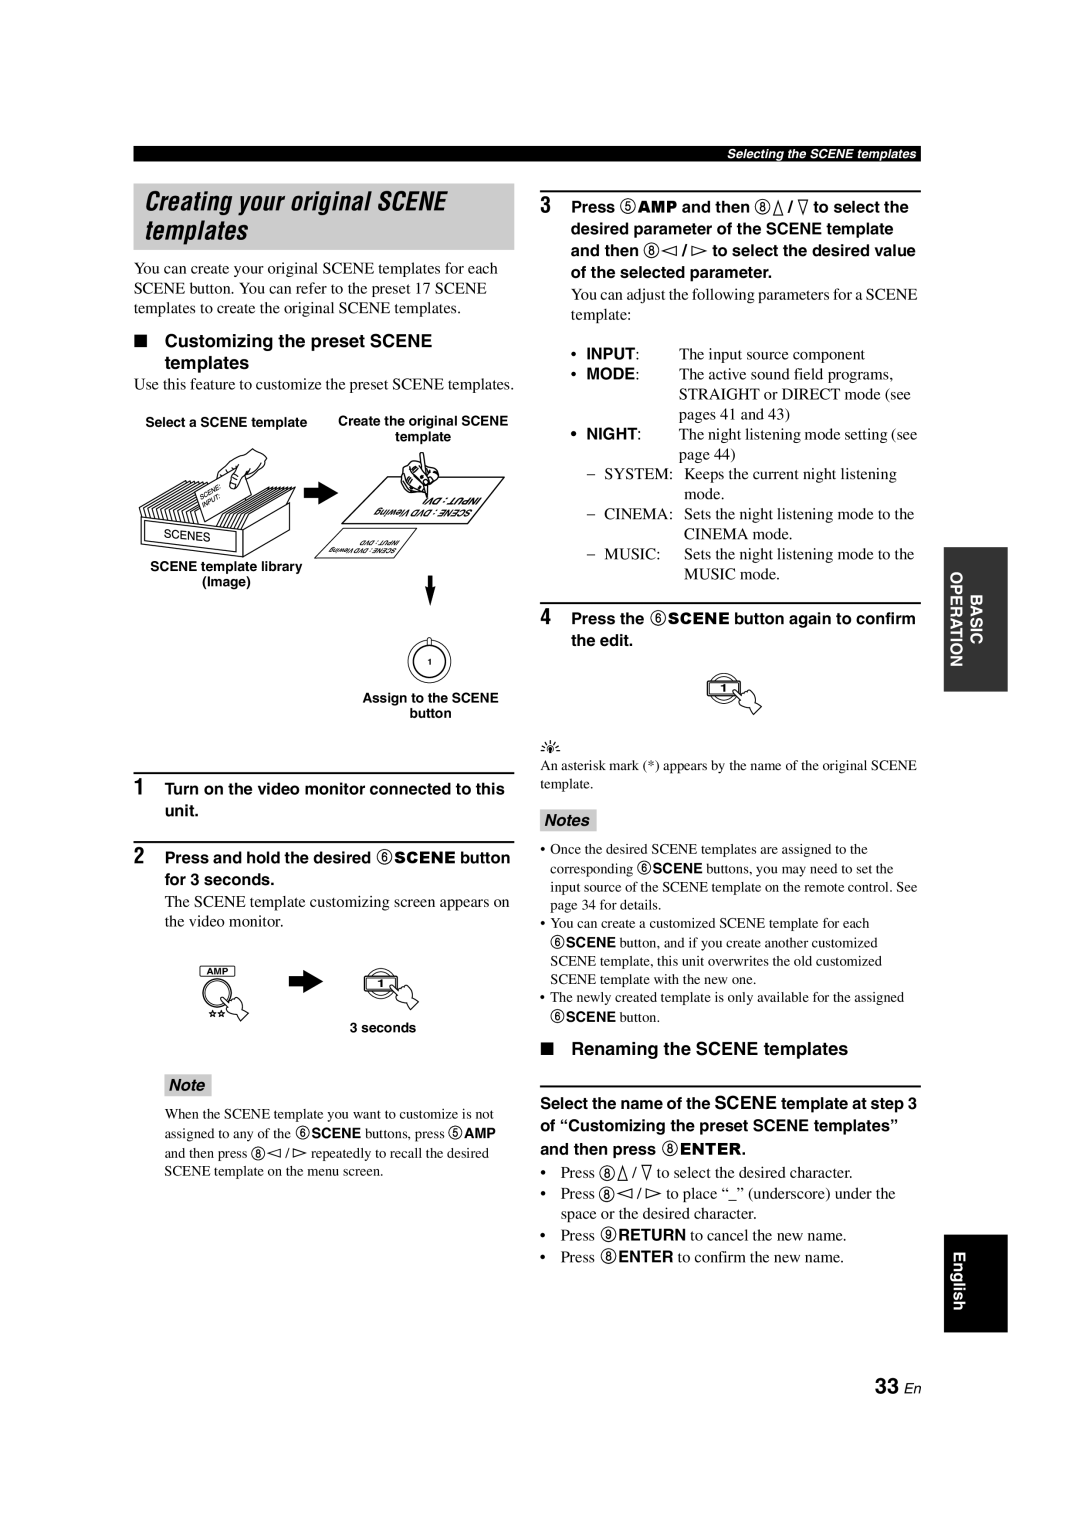 Yamaha HTR-6150 owner manual Creating your original SCENE templates, 33 En, Customizing the preset SCENE templates, Notes 